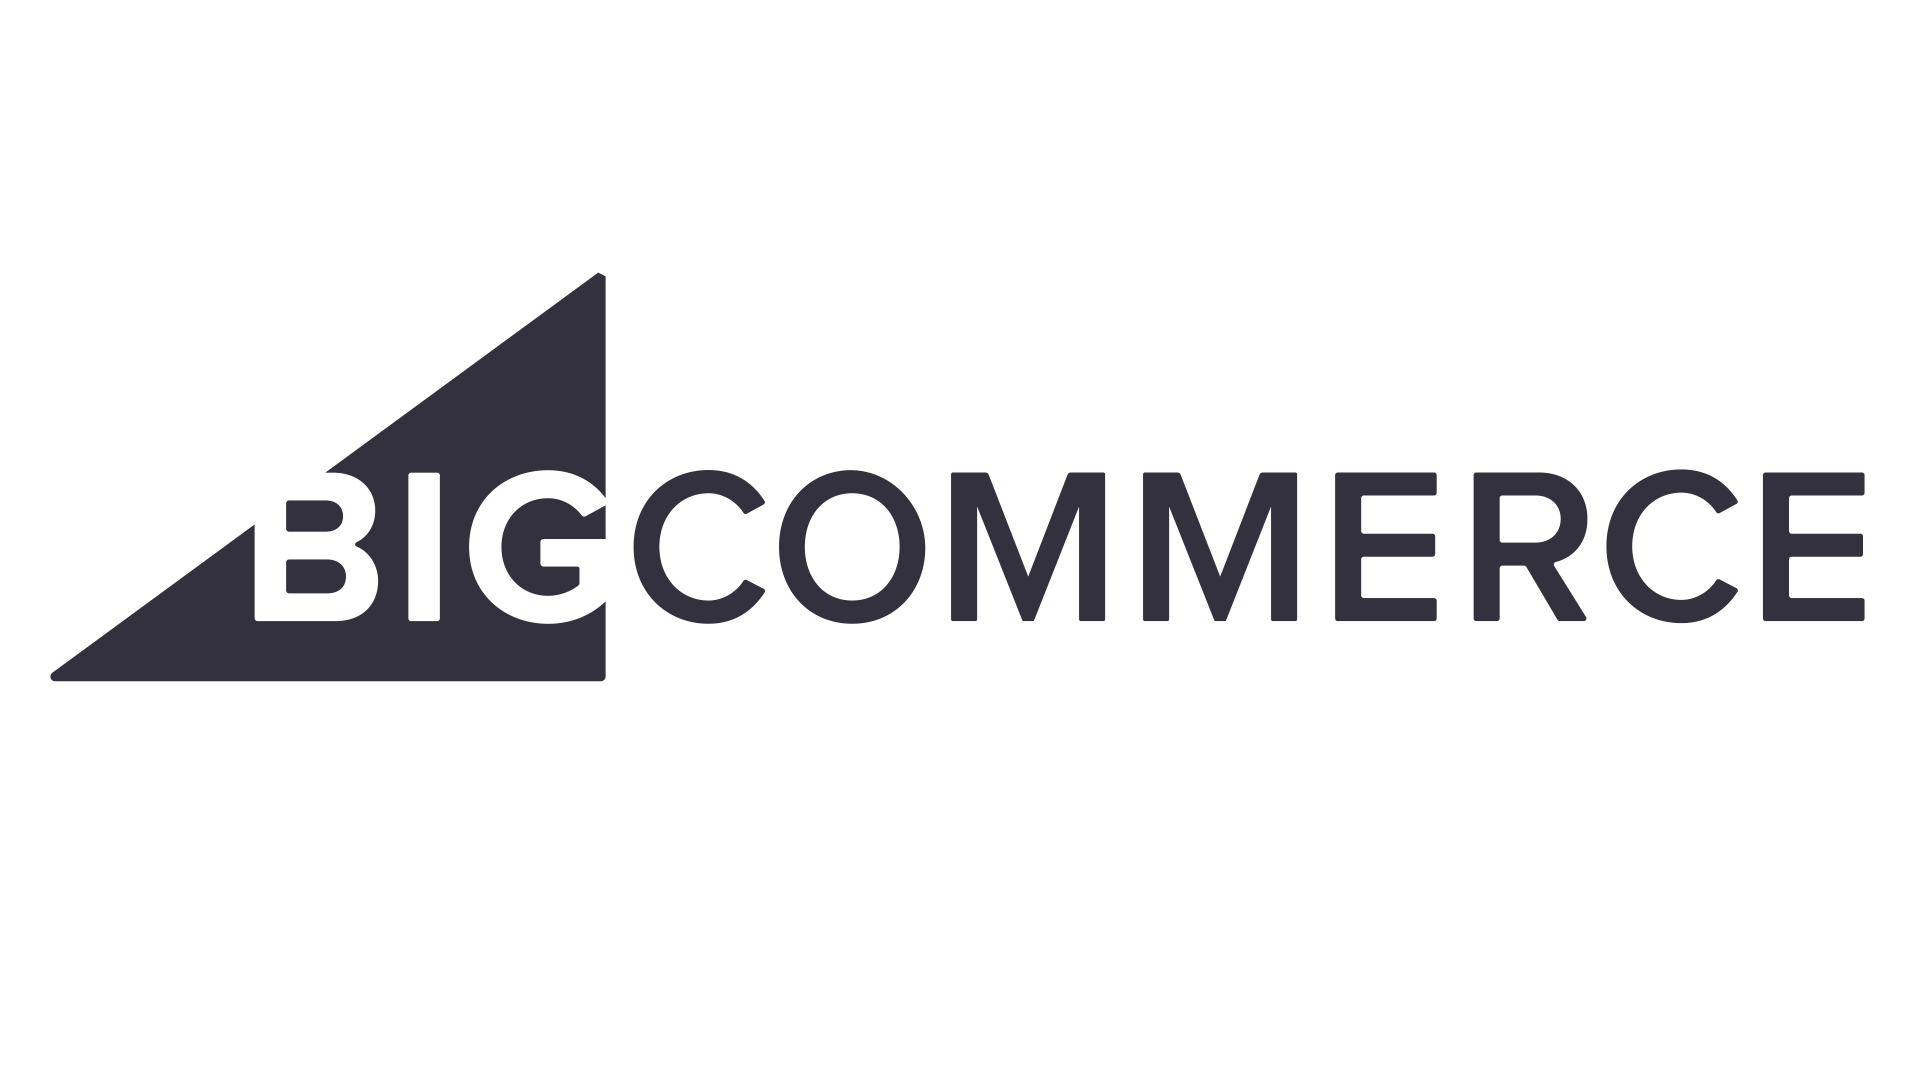 Blog.com Logo - 1 Ecommerce Blog on Marketing & Selling Online